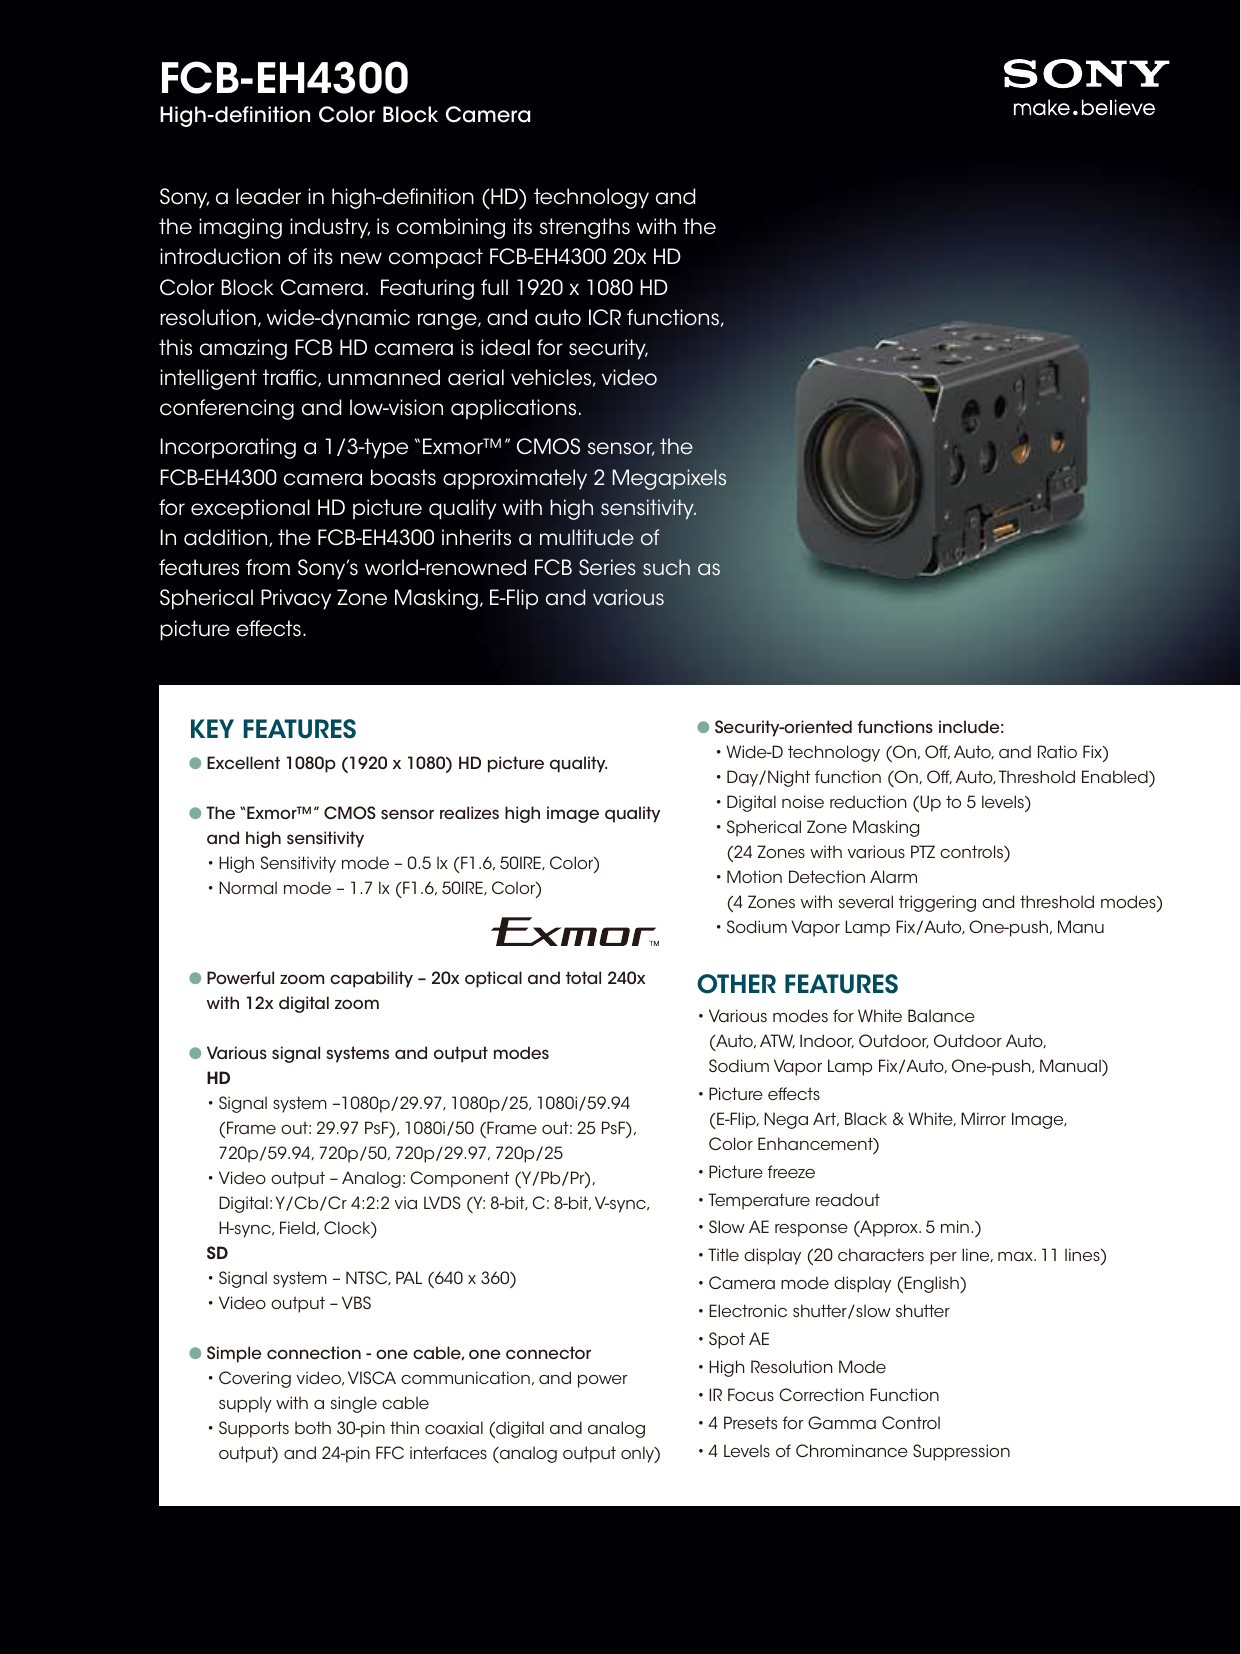 Sony FCB-EV7300 Full HD Block Camera with 20x Optical Zoom 1080/60p 